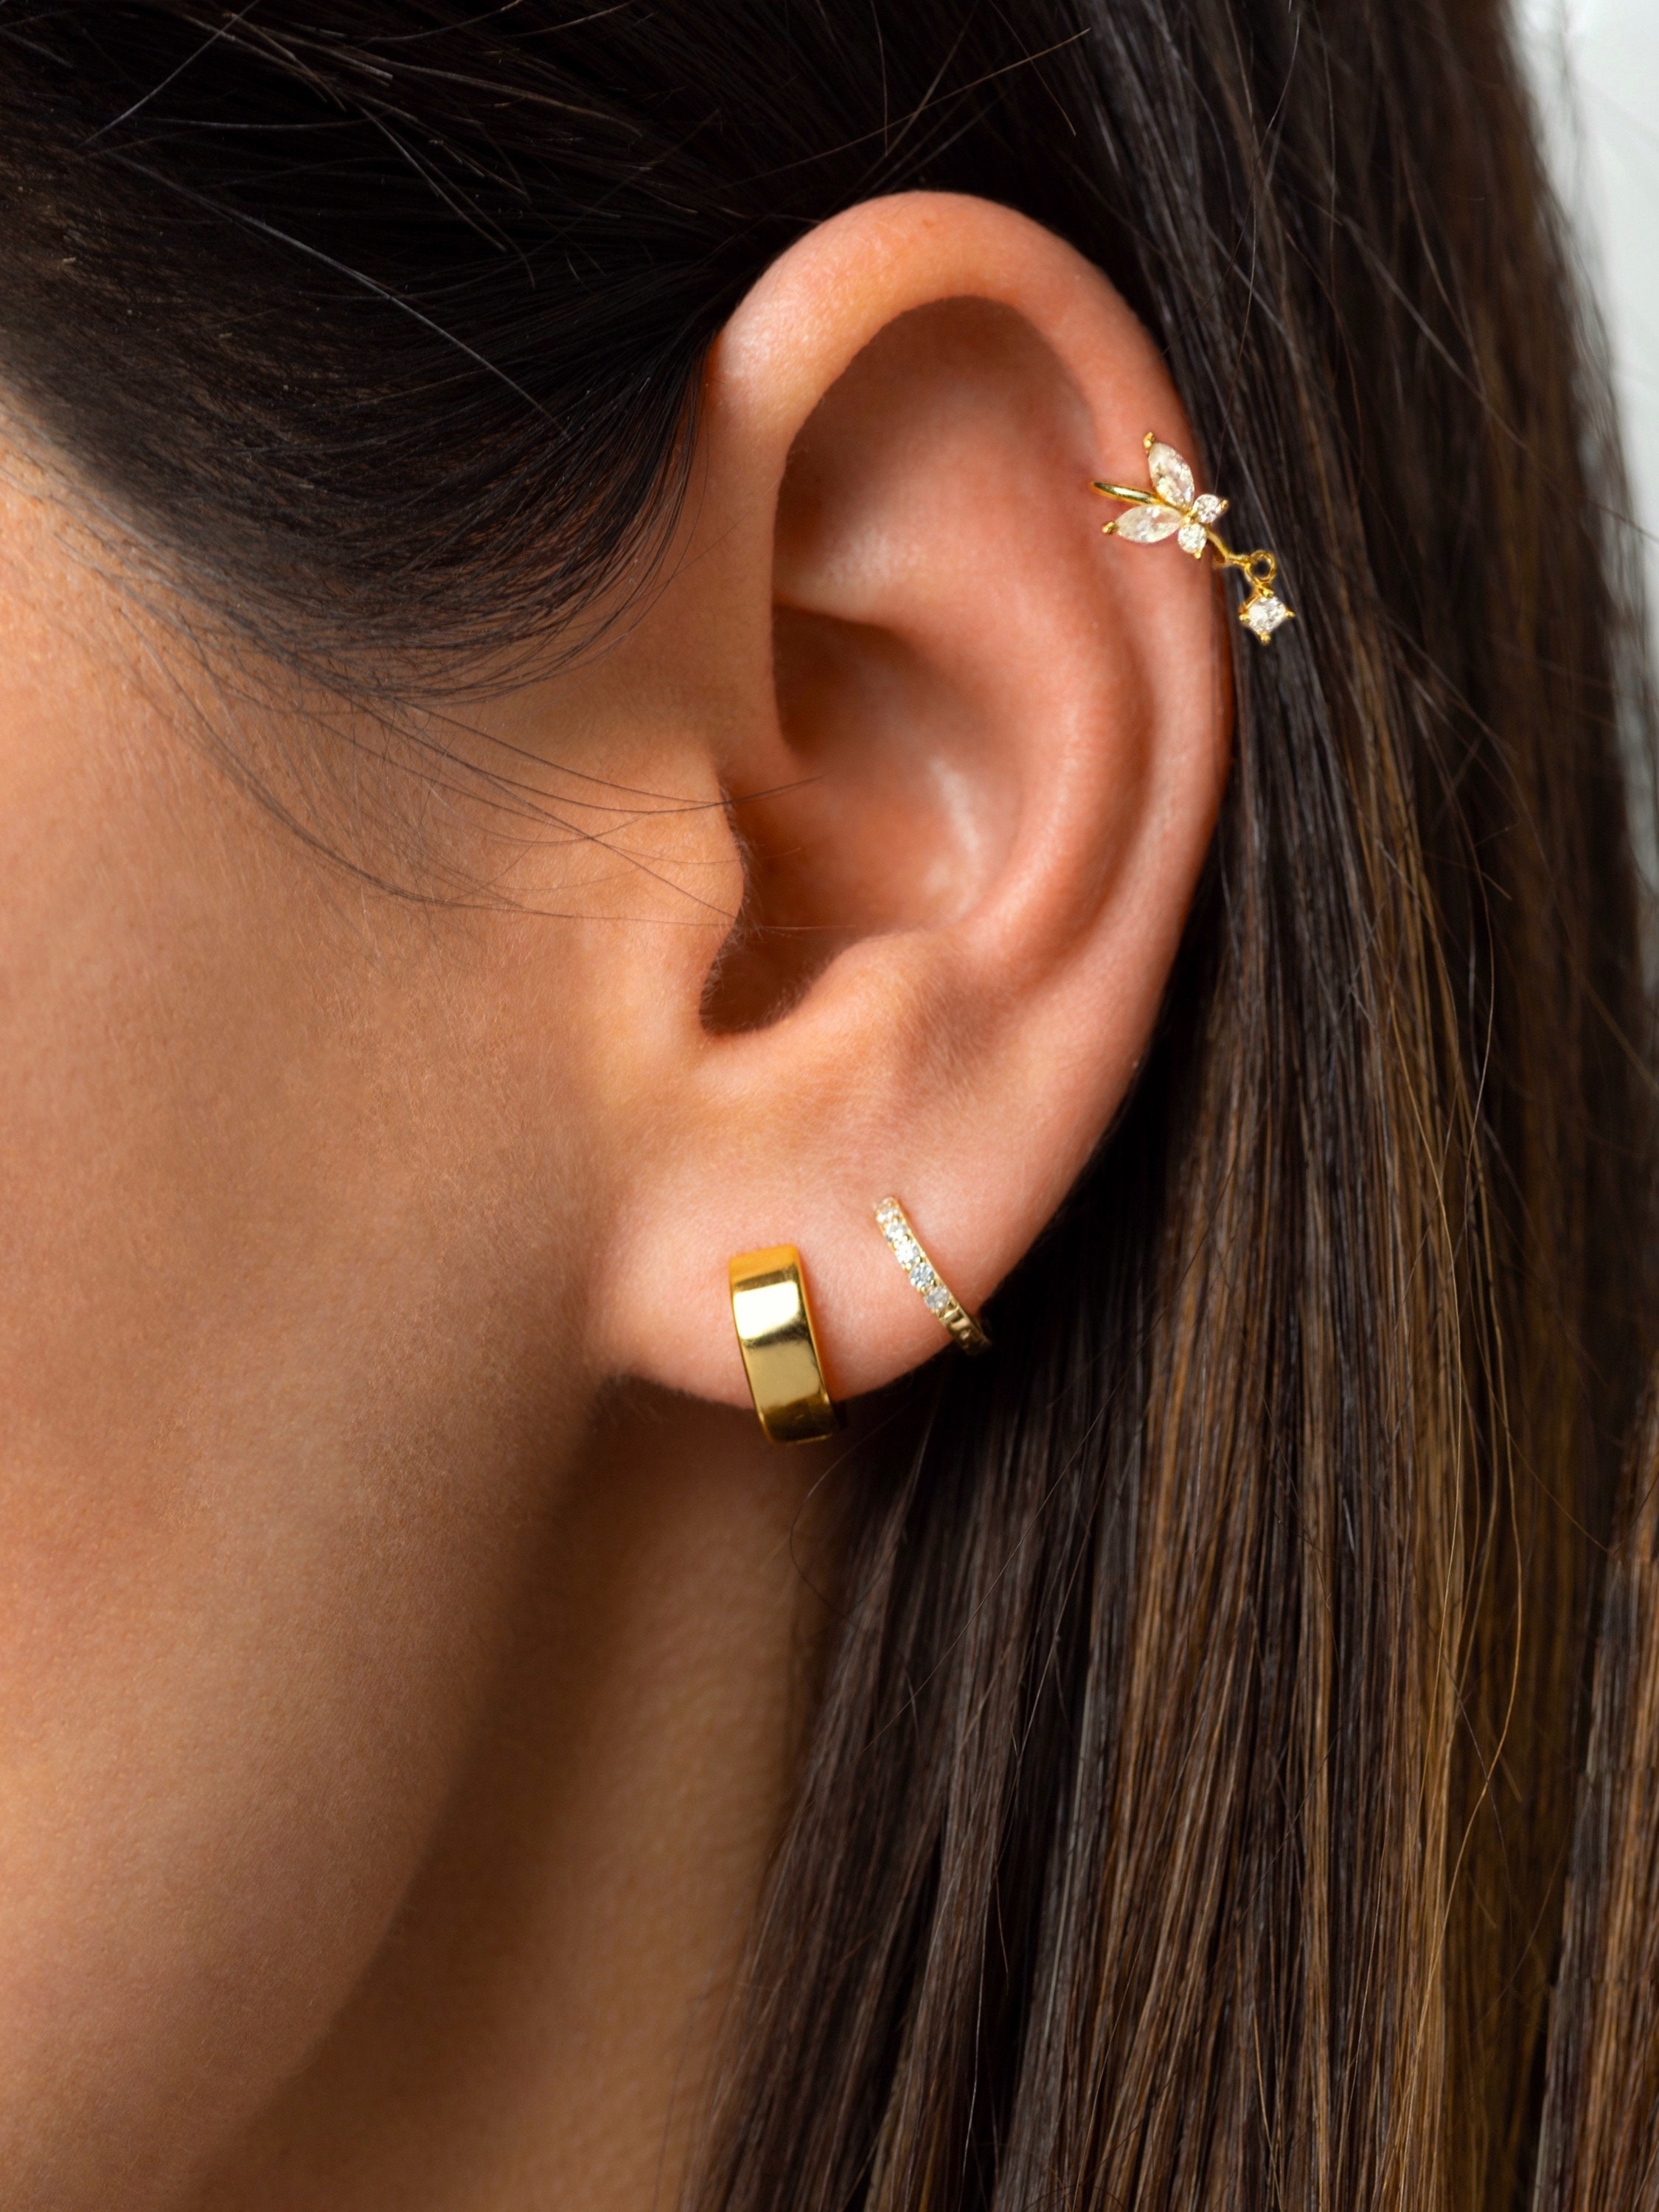 CZ Rectangle Minimalist Sterling Silver Small Hoop Earrings for Women Girls  Geometric Chunky Huggie Hoops Cartilage Dainty Hypoallergenic Jewelry